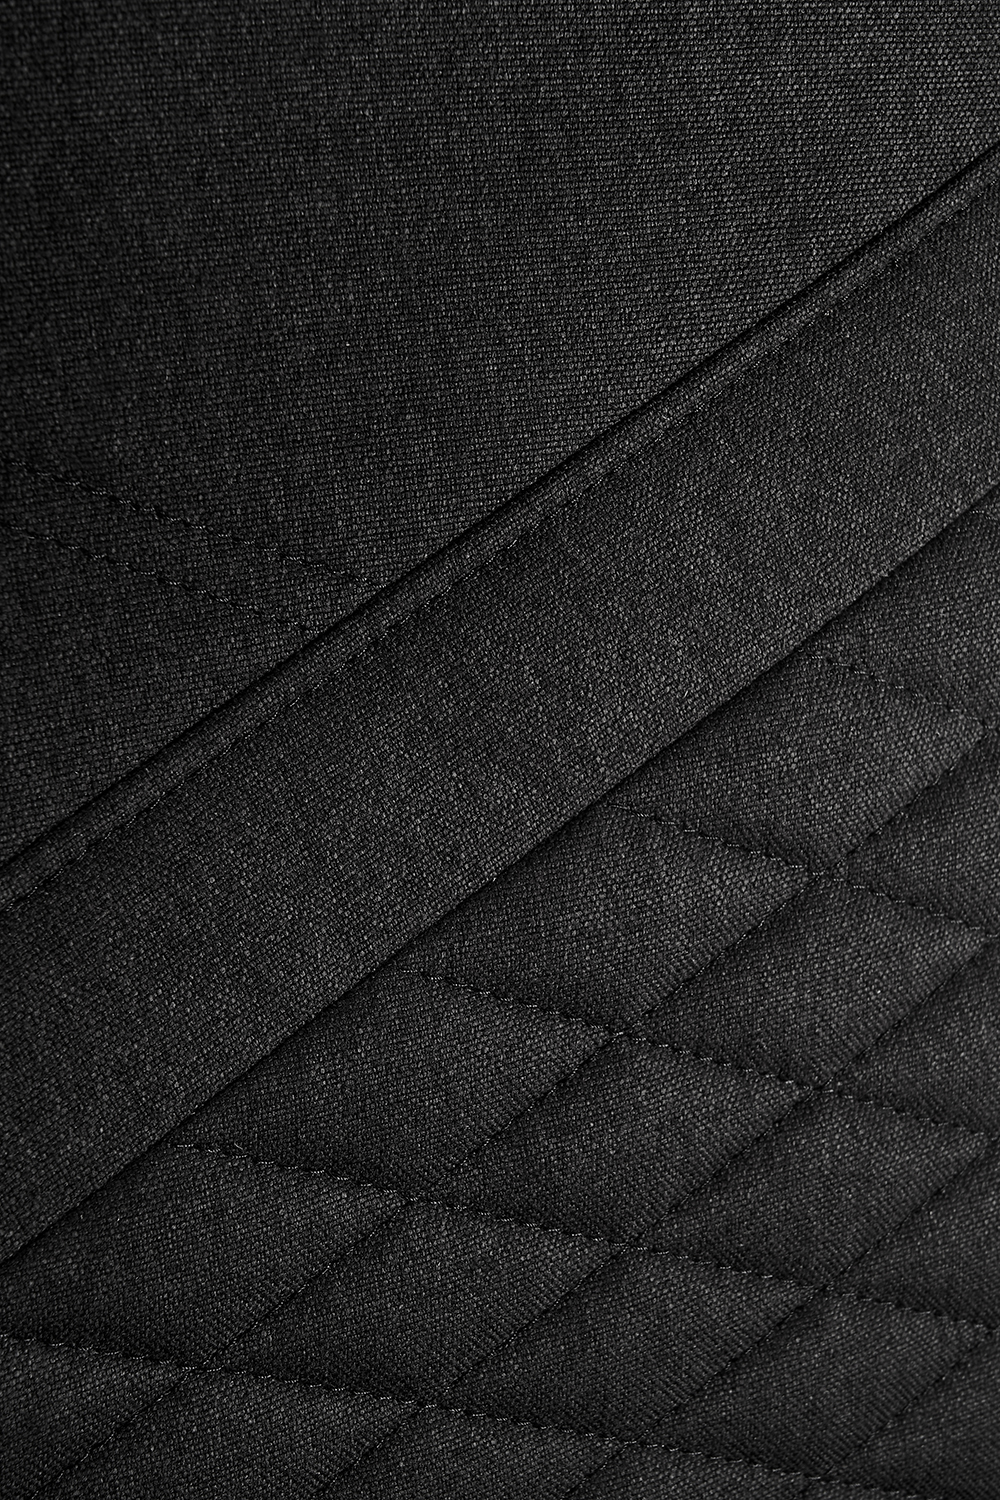 SENSE7 Spellcaster Fabric Gaming Chair Senshi Edition: Black - Sense7